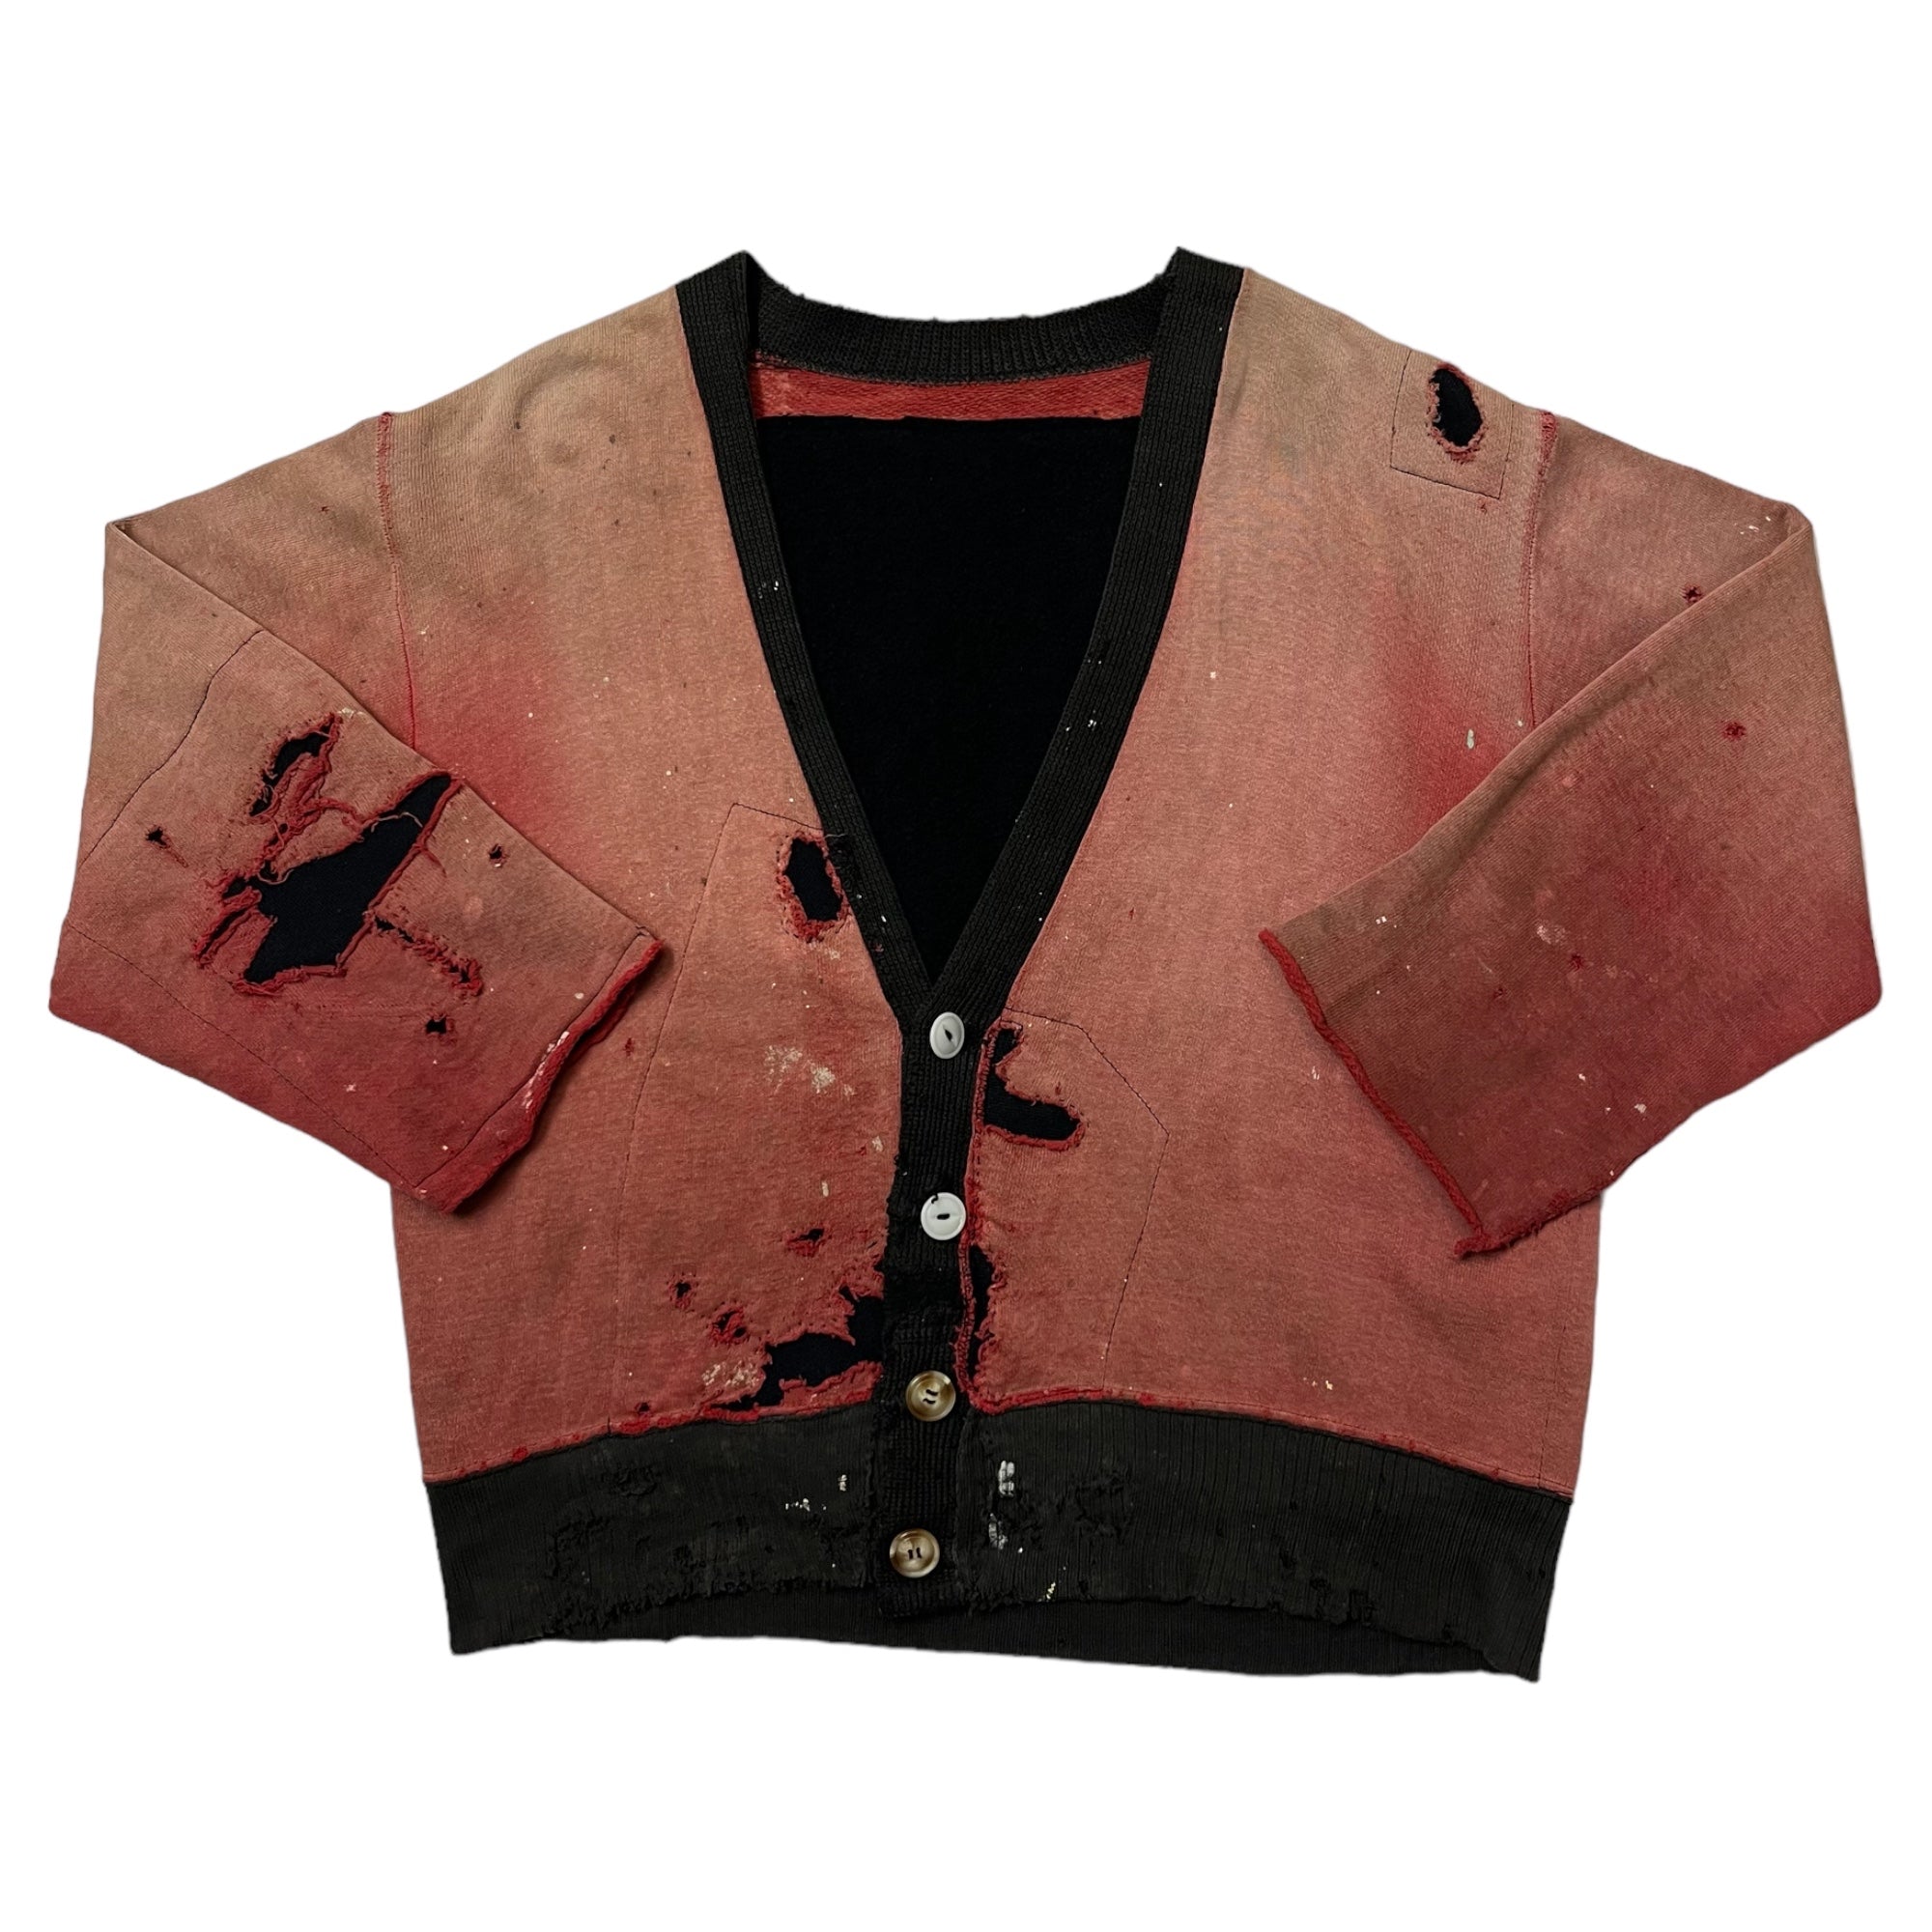 1940s Thrashed Two-Tone Sweatshirt Cardigan - Faded Red/Black - S